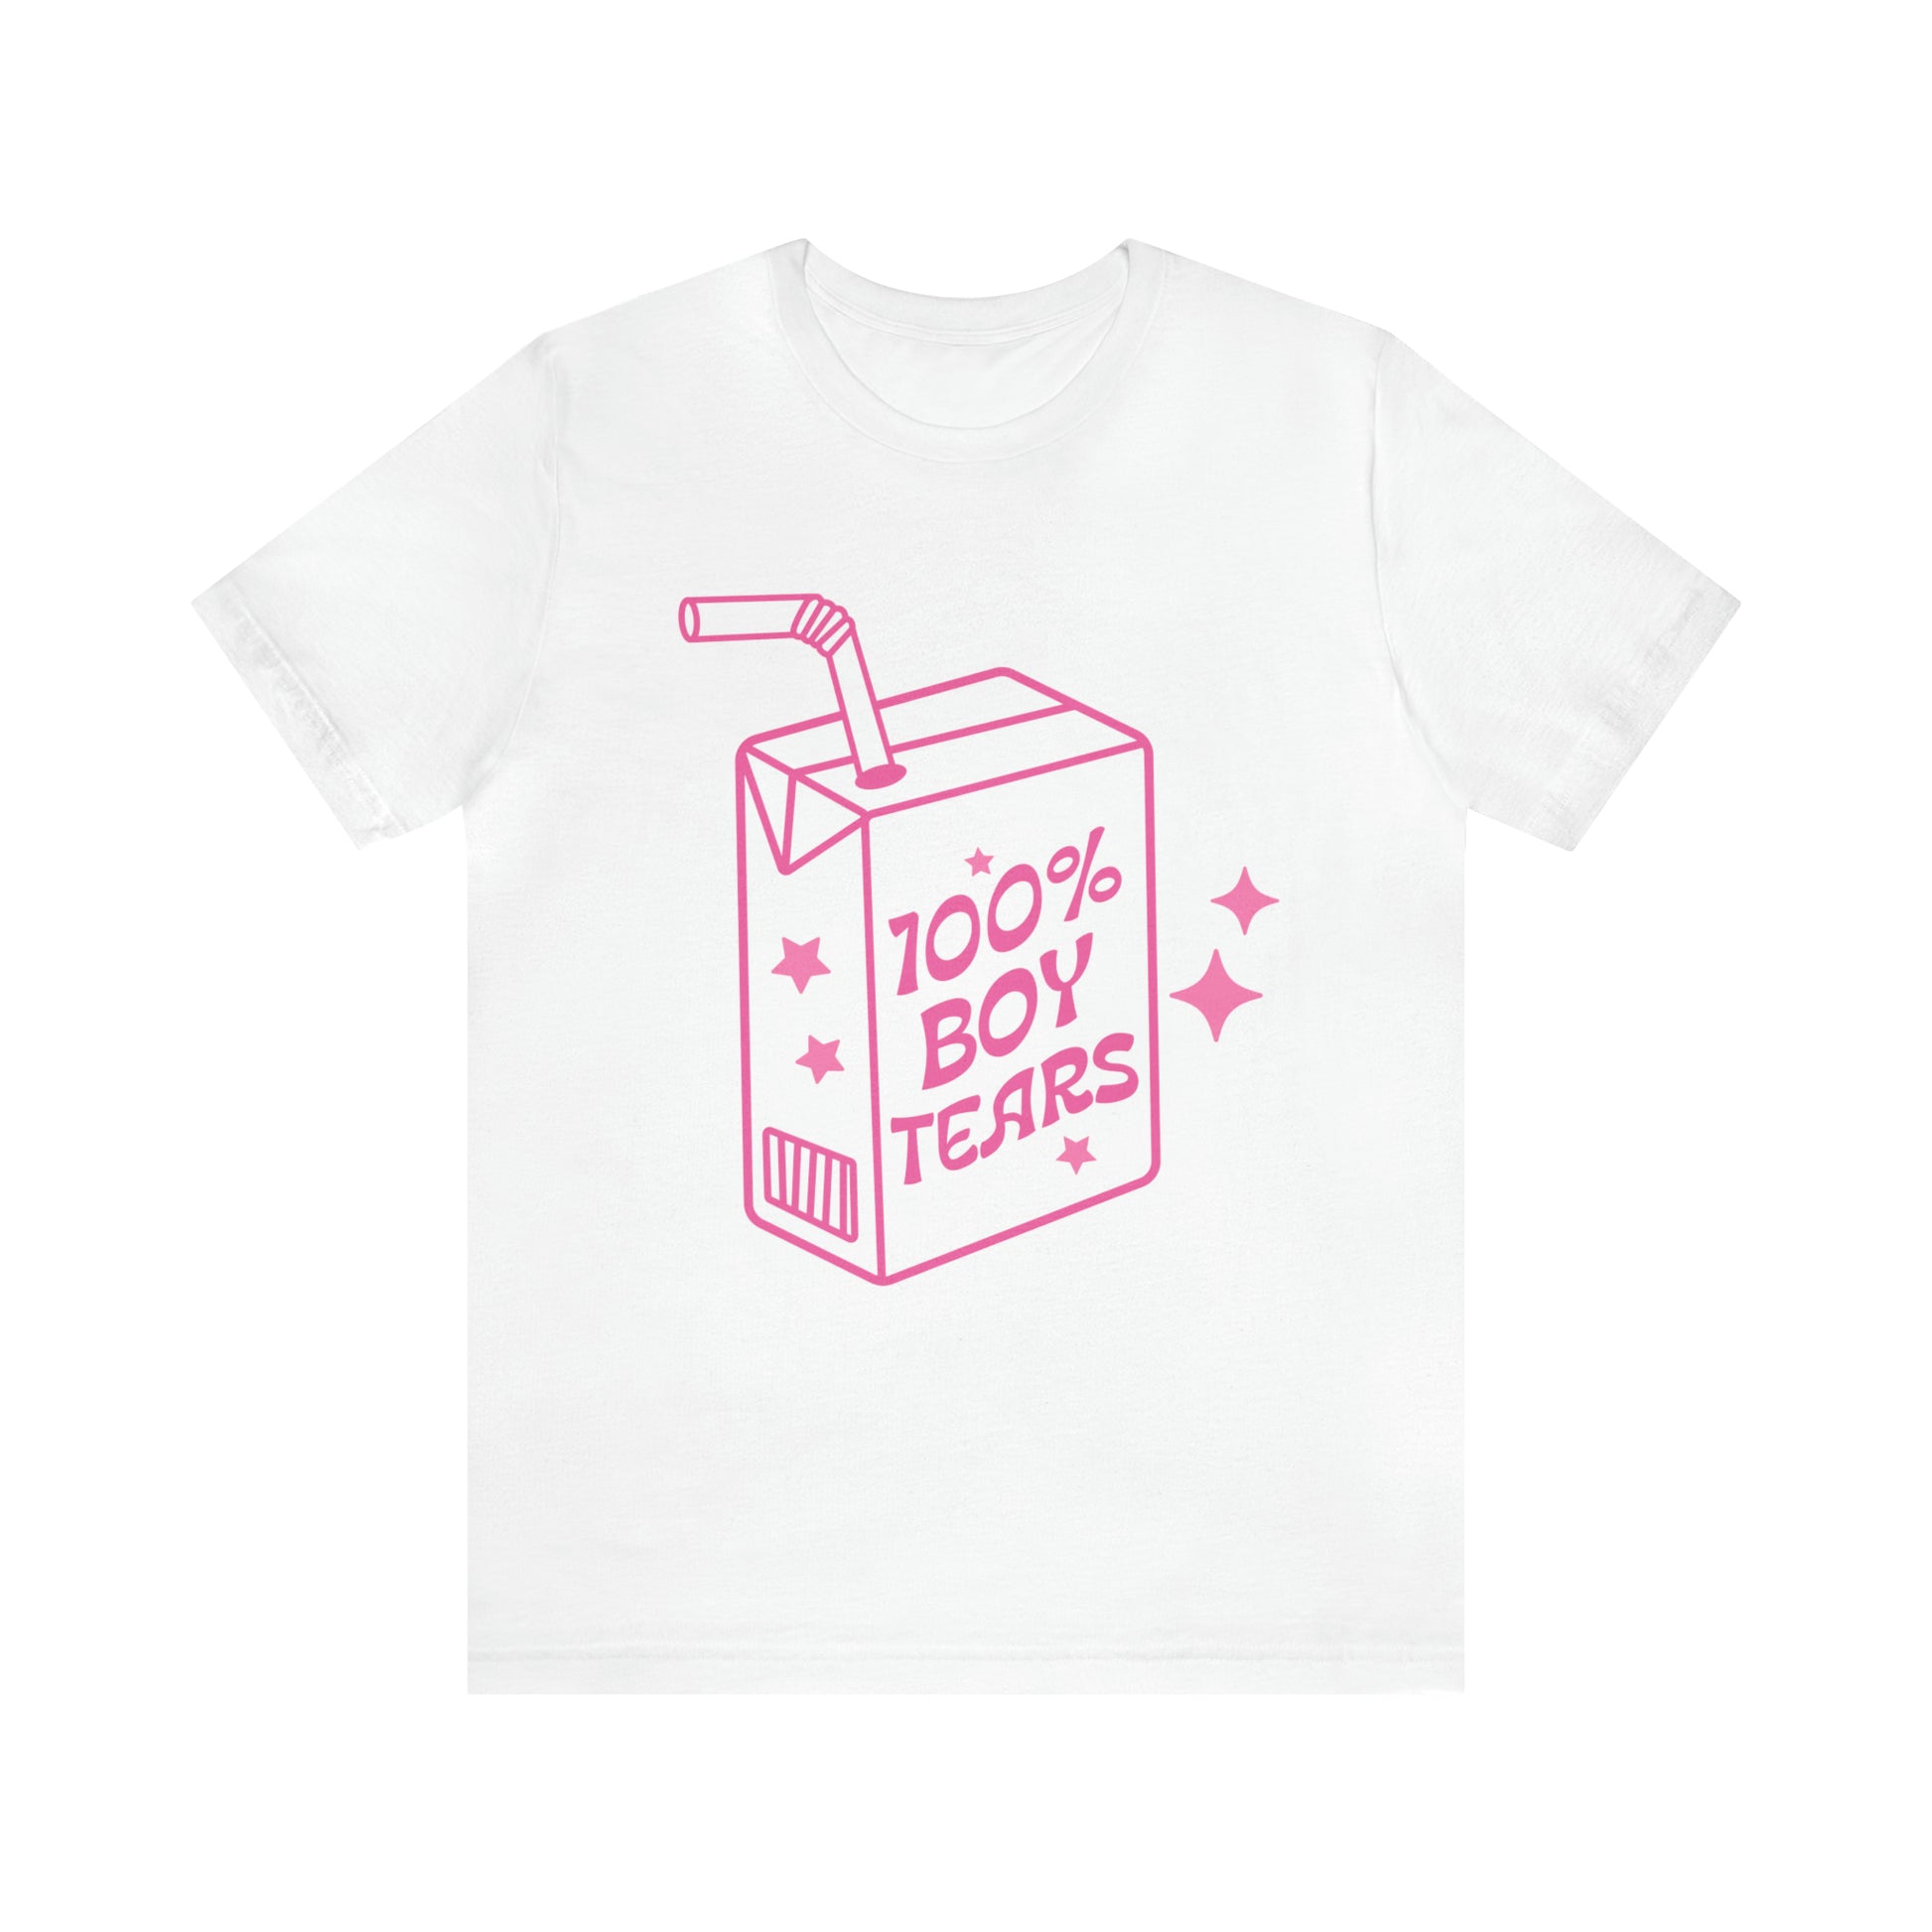 100% Boy Tears Funny Sarcastic Shirt for Girls